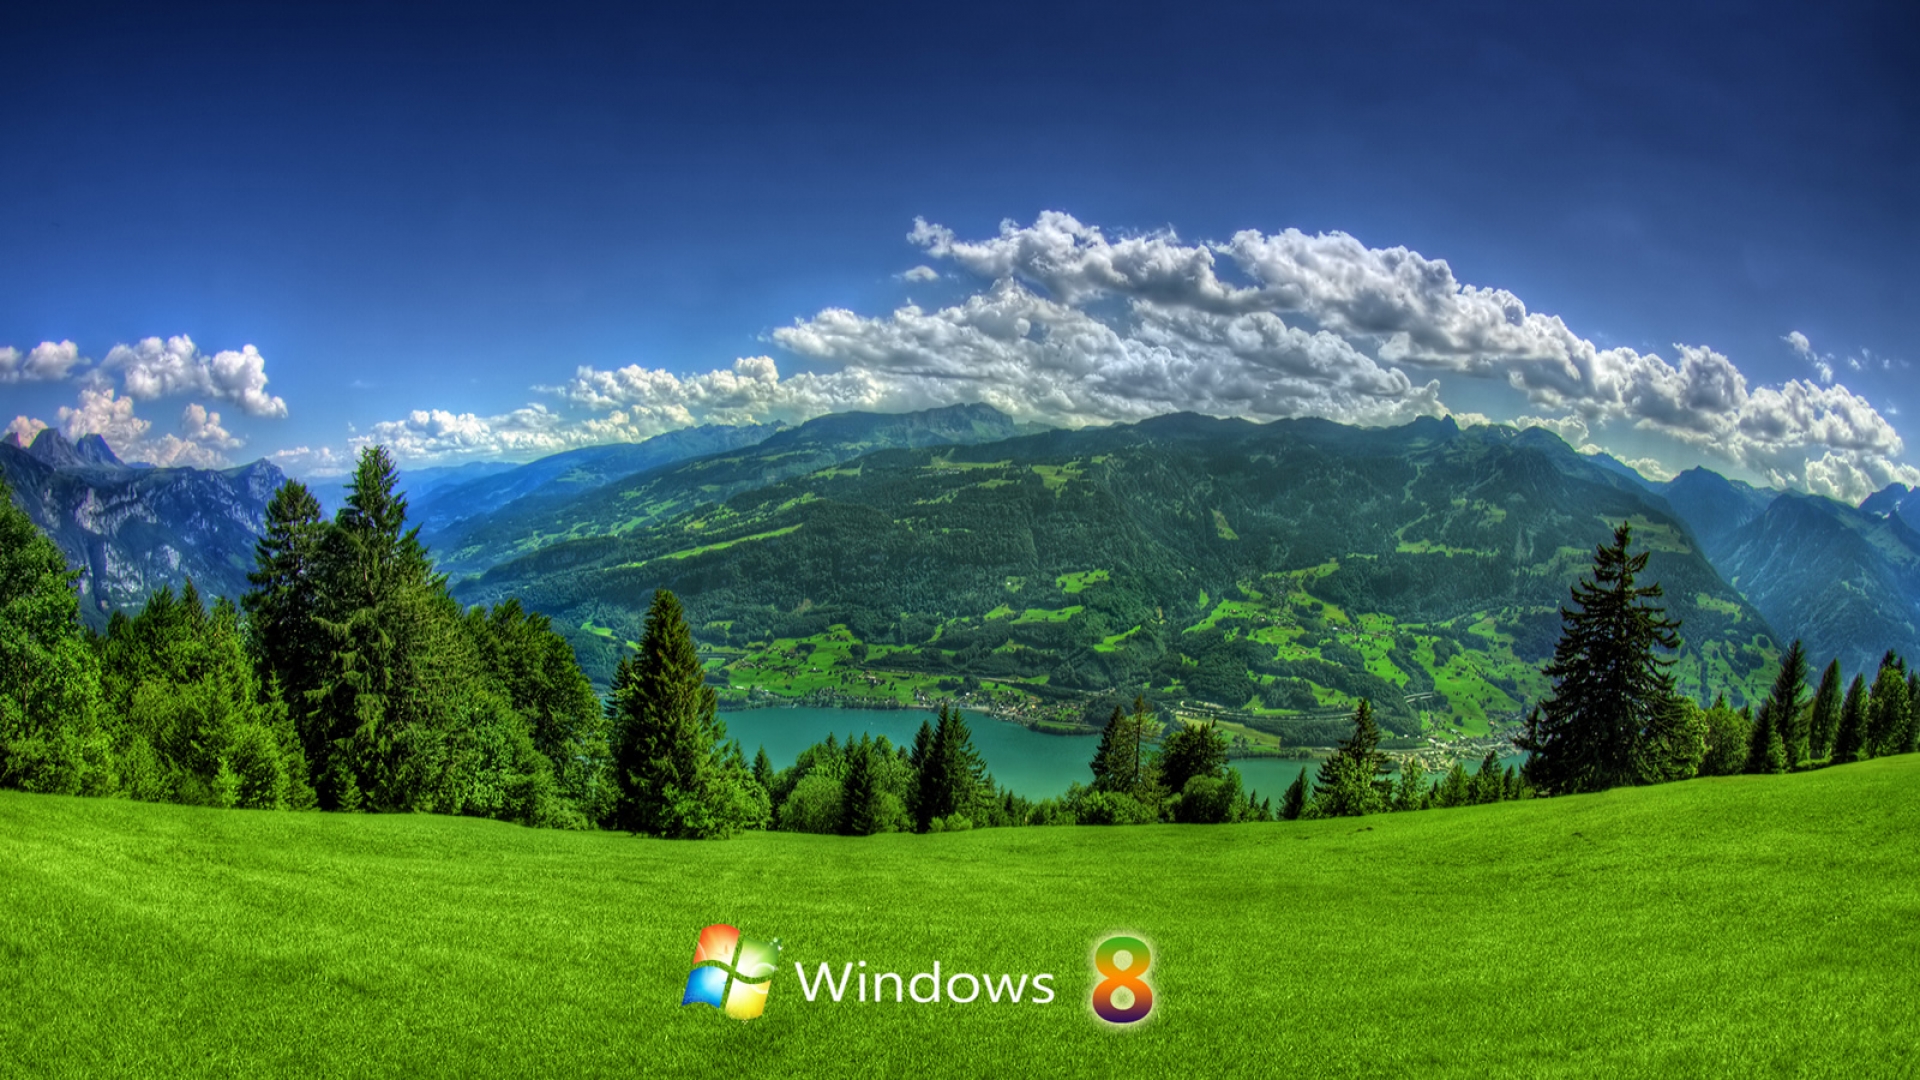 windows 8, windows, technology